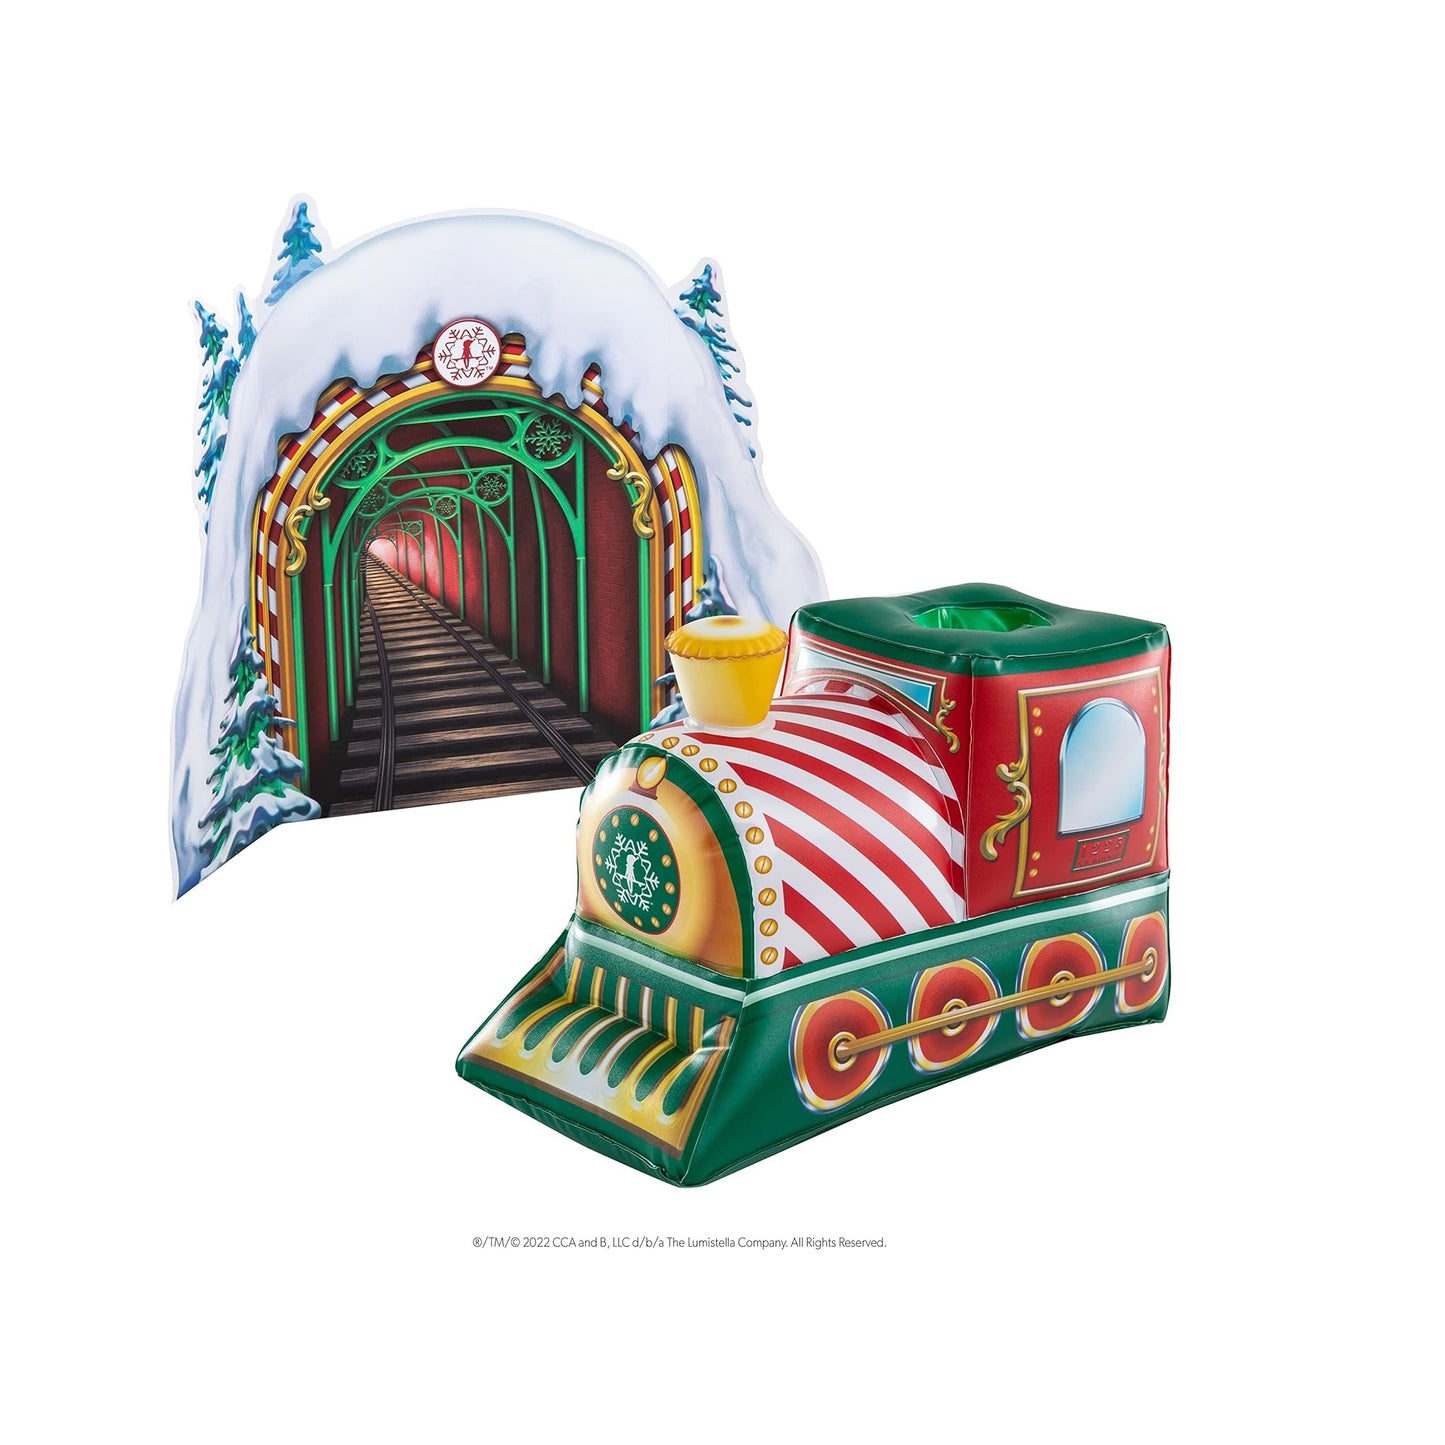 Scout Elfes à Play Peppermint Train Ride